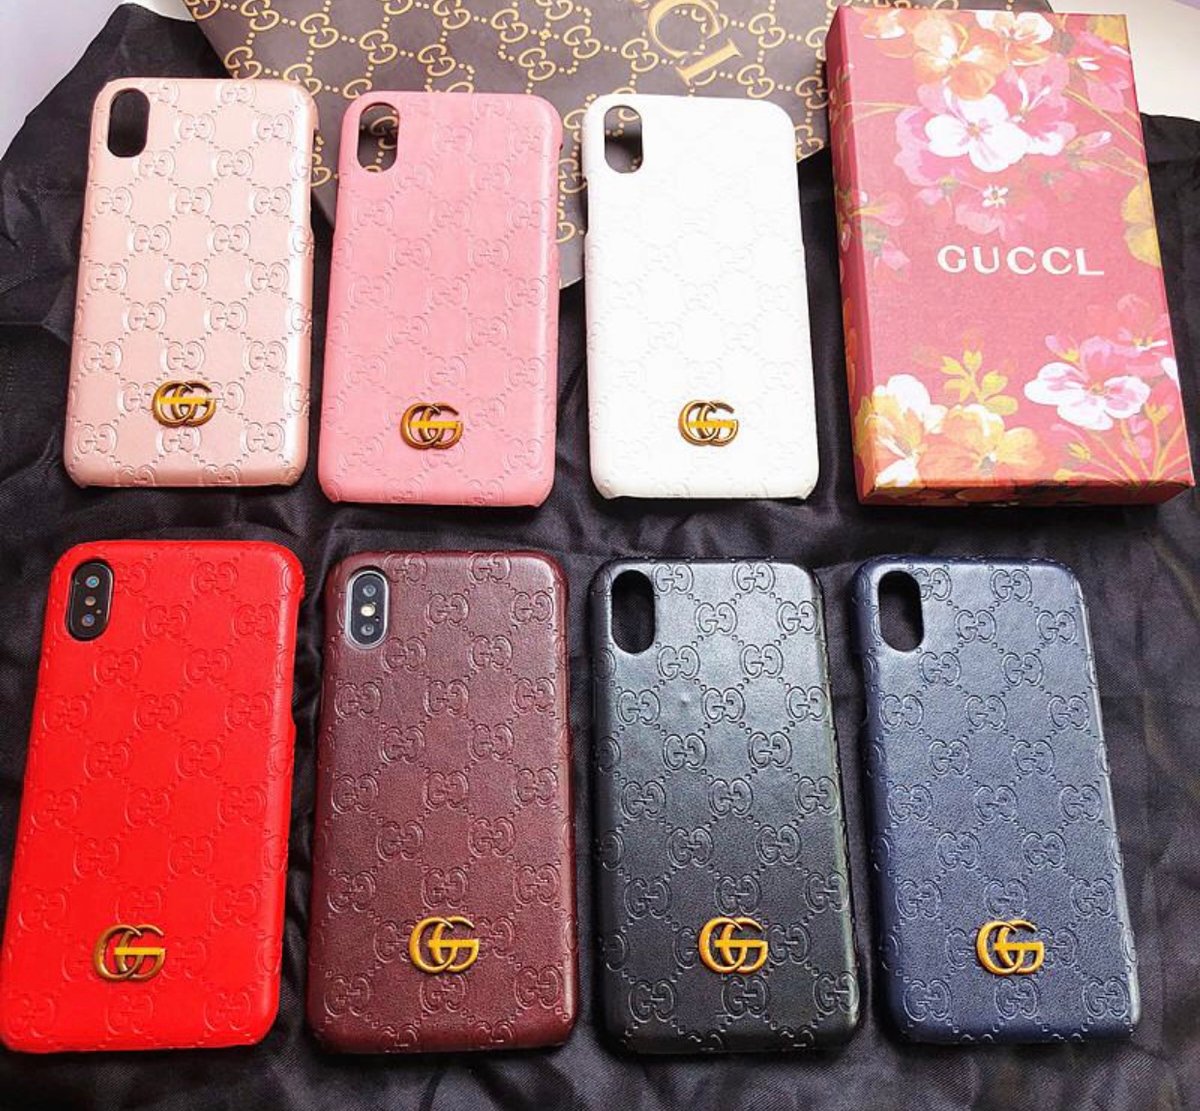 Gucci iPhone Case Couture